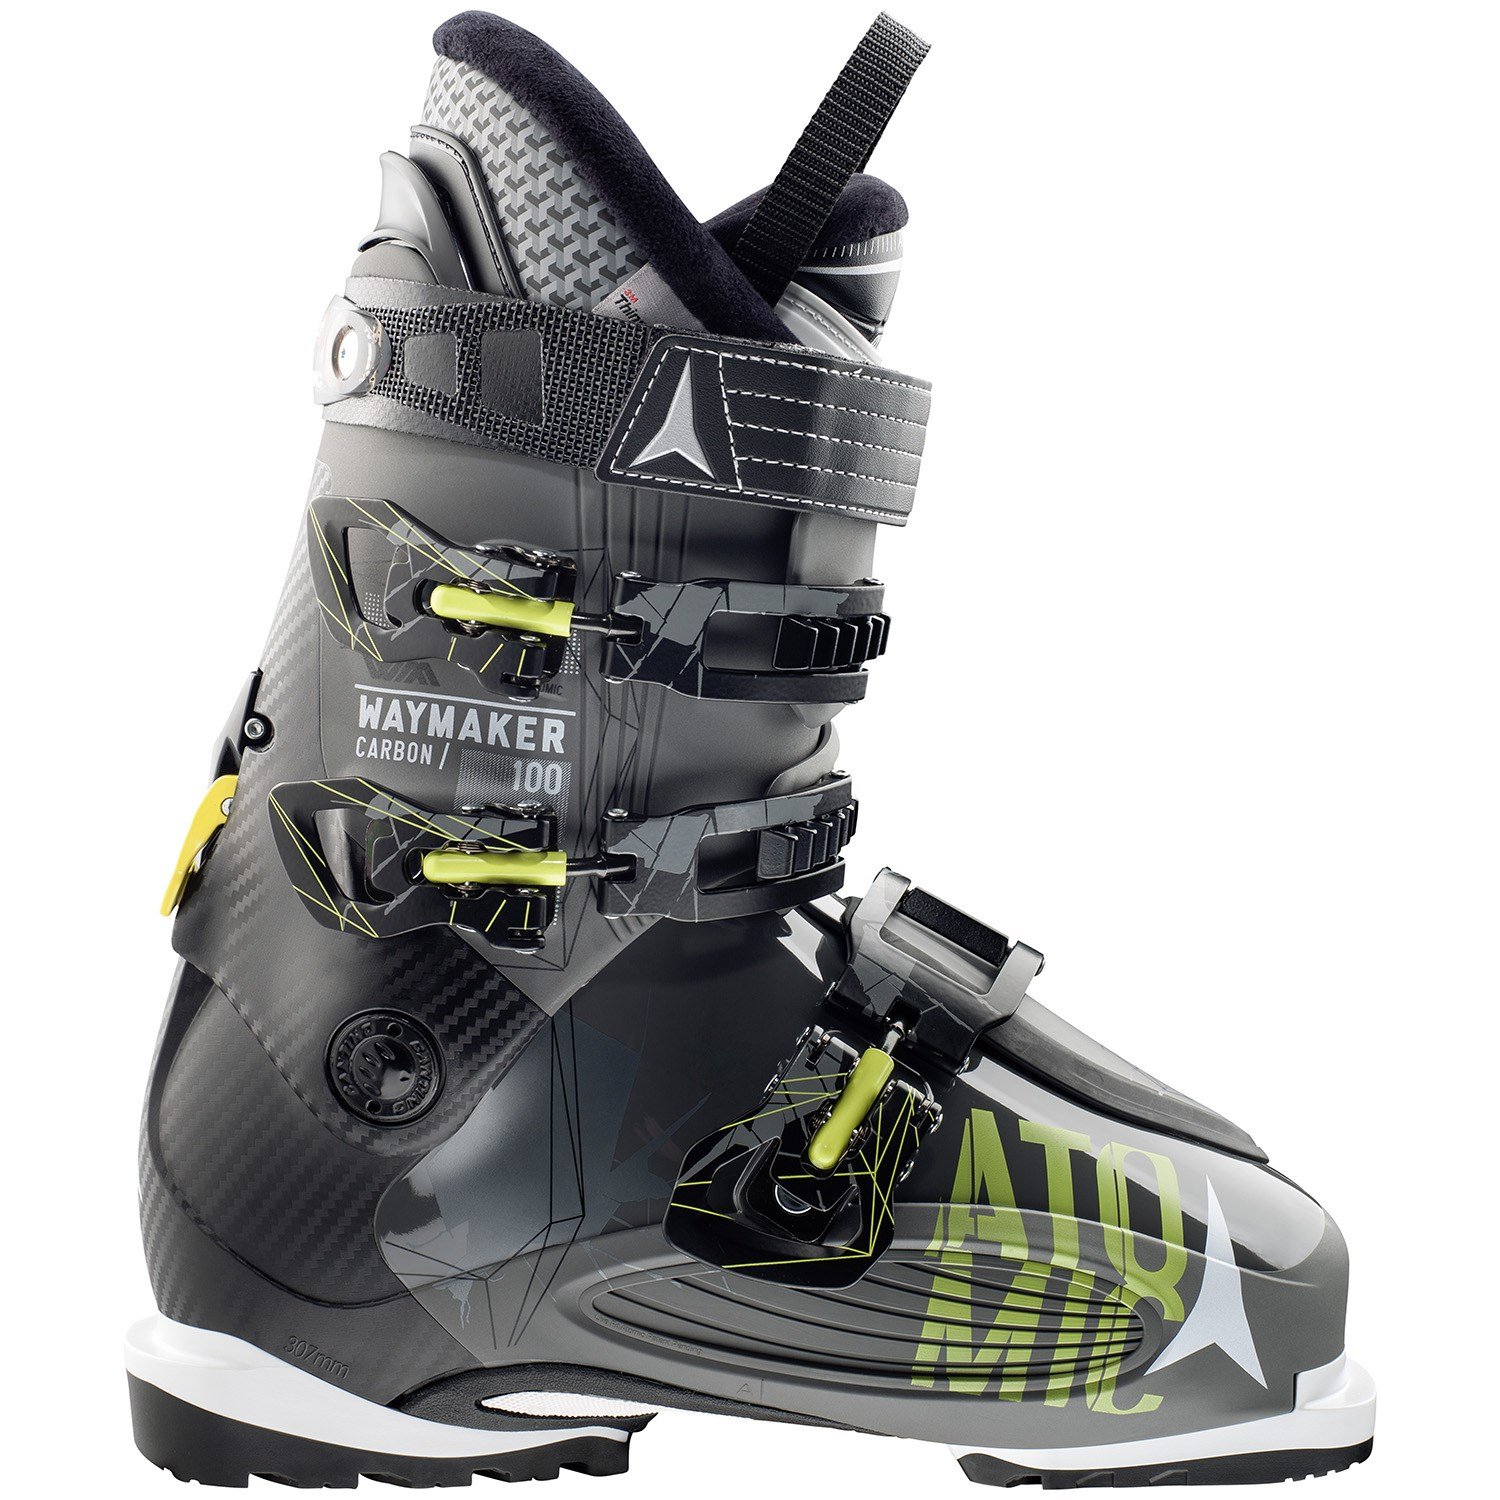 Atomic Waymaker Carbon 100 Ski Boots 2016 | evo